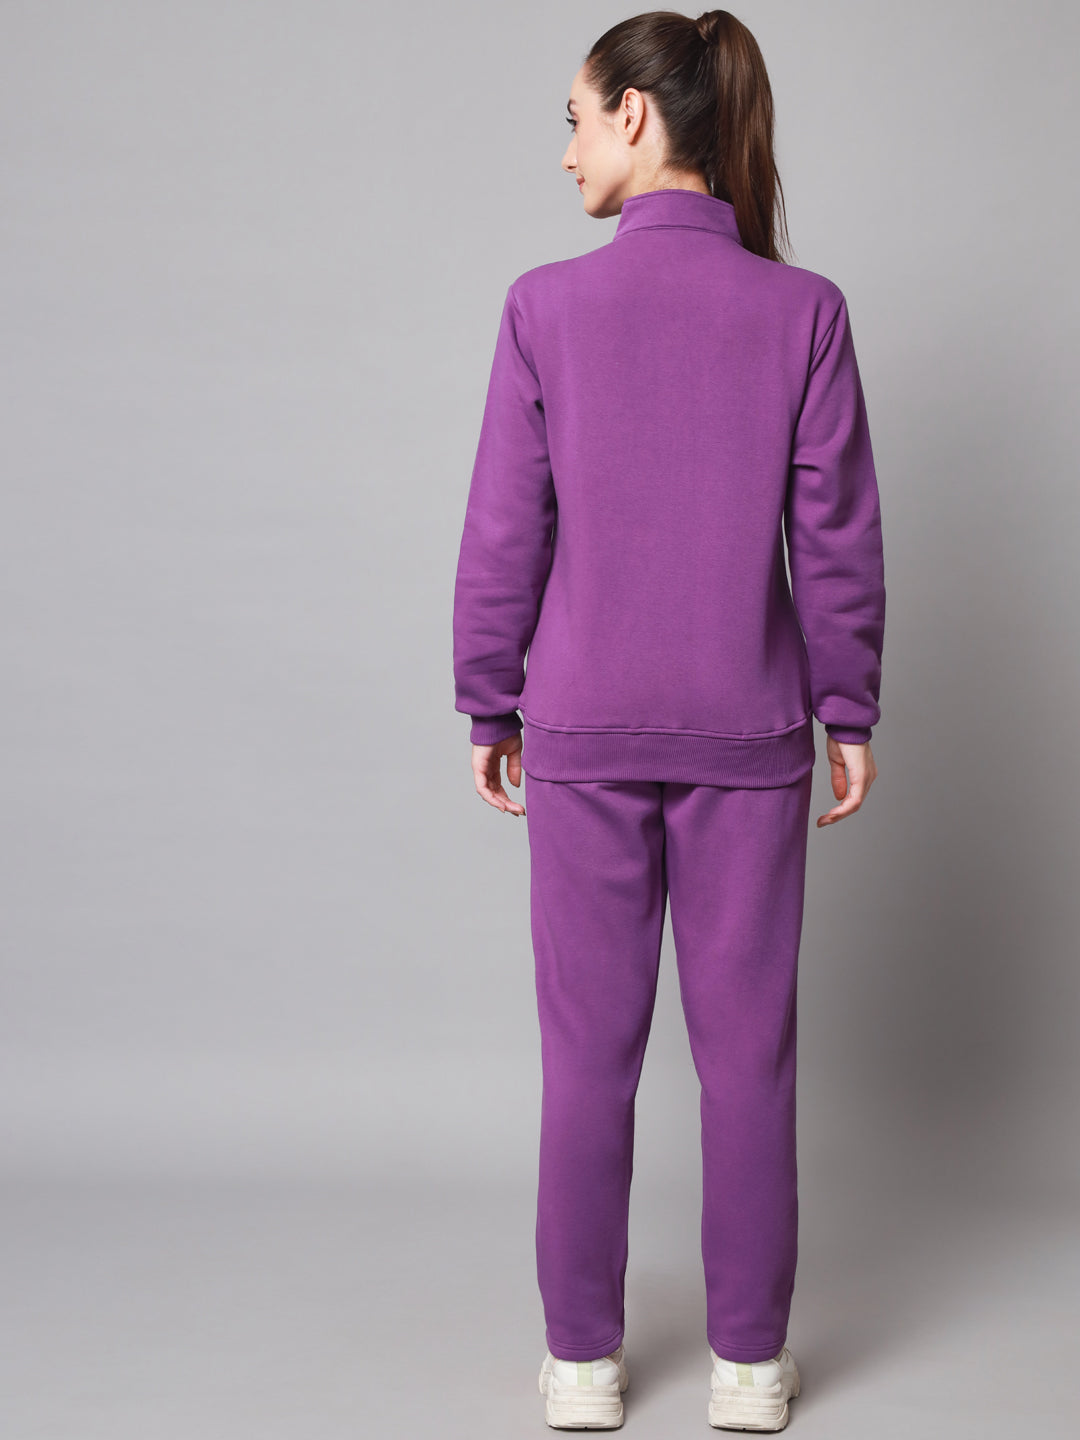 Griffel Women Solid Fleece Zipper Neck Sweatshirt and Joggers Full set Dark Purple Tracksuit - griffel